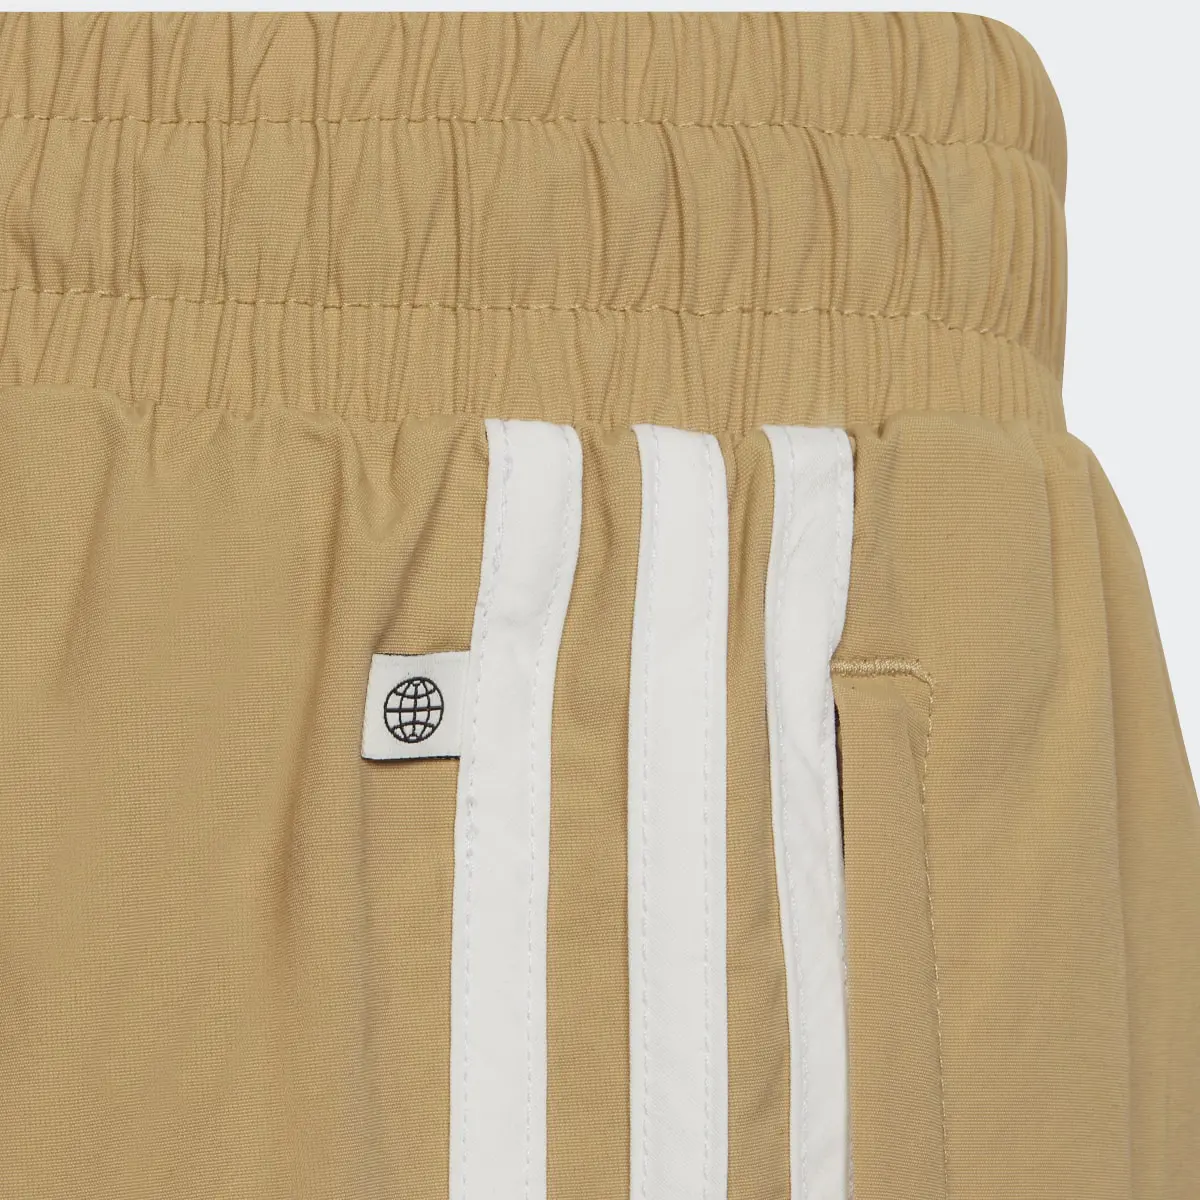 Adidas Woven Track Pants. 3